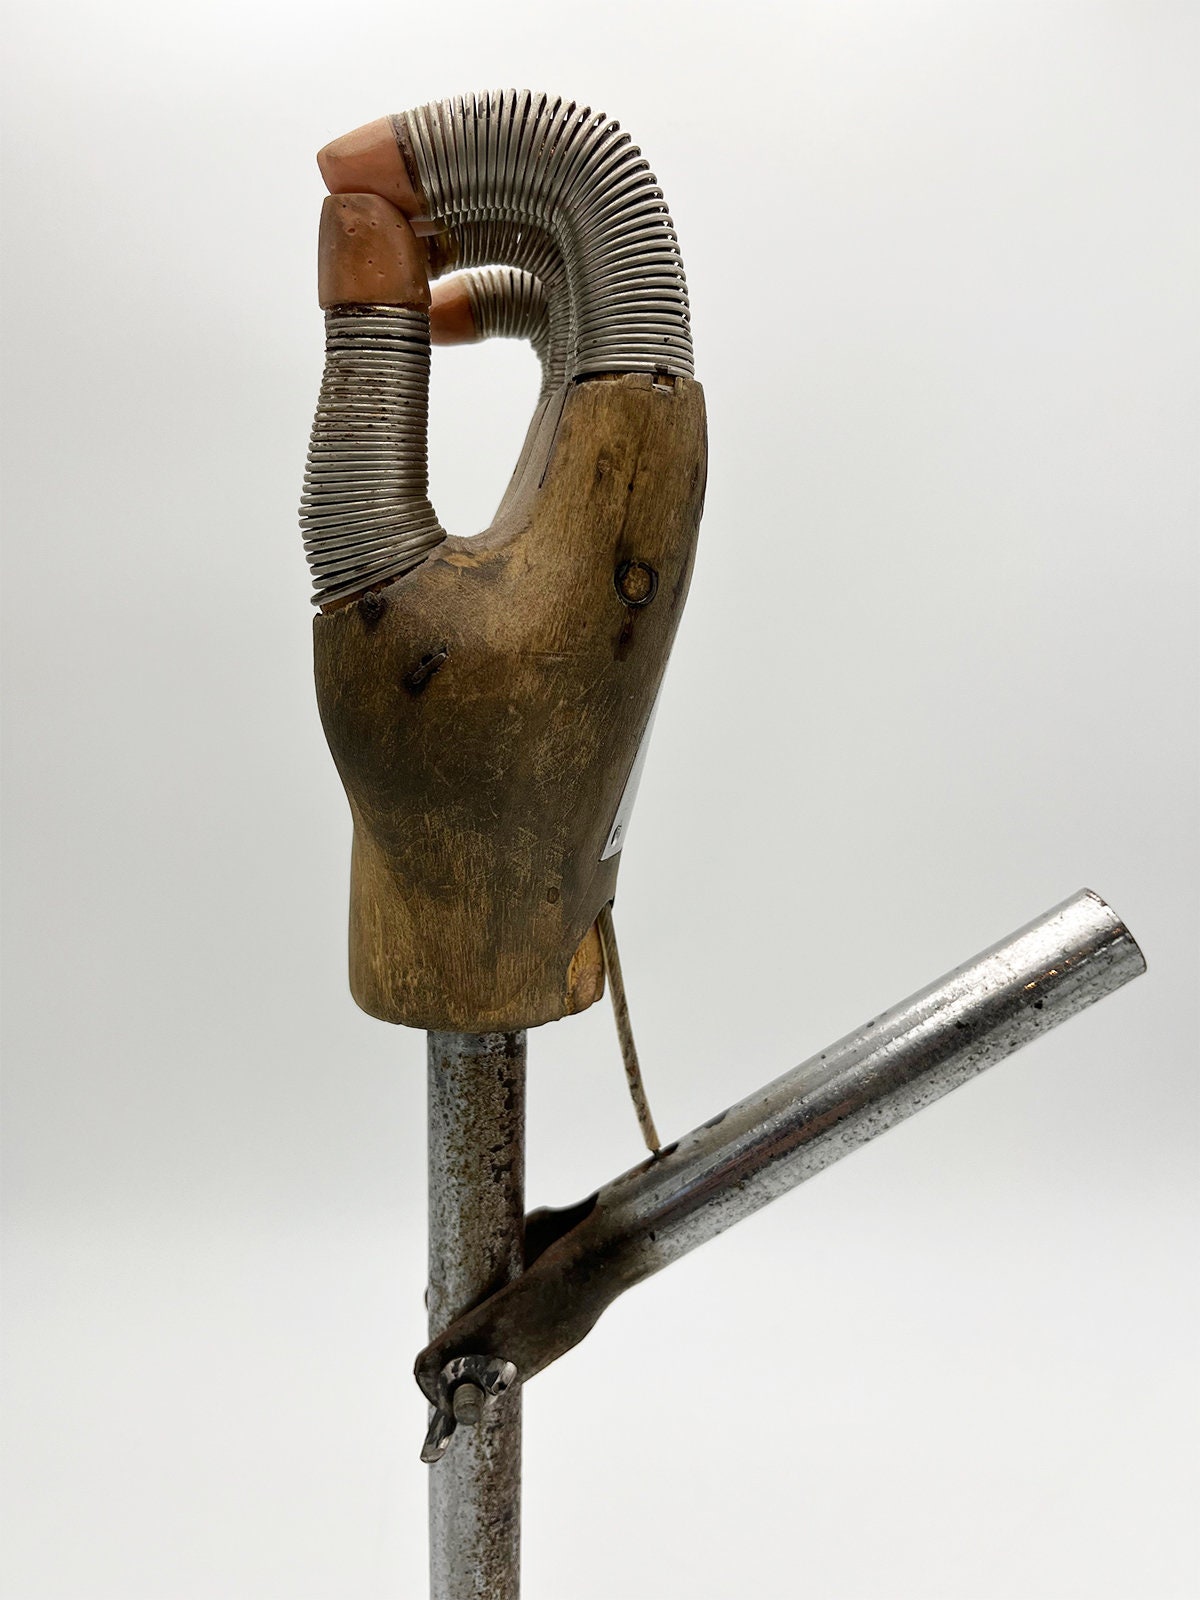 Antique prosthetic hook